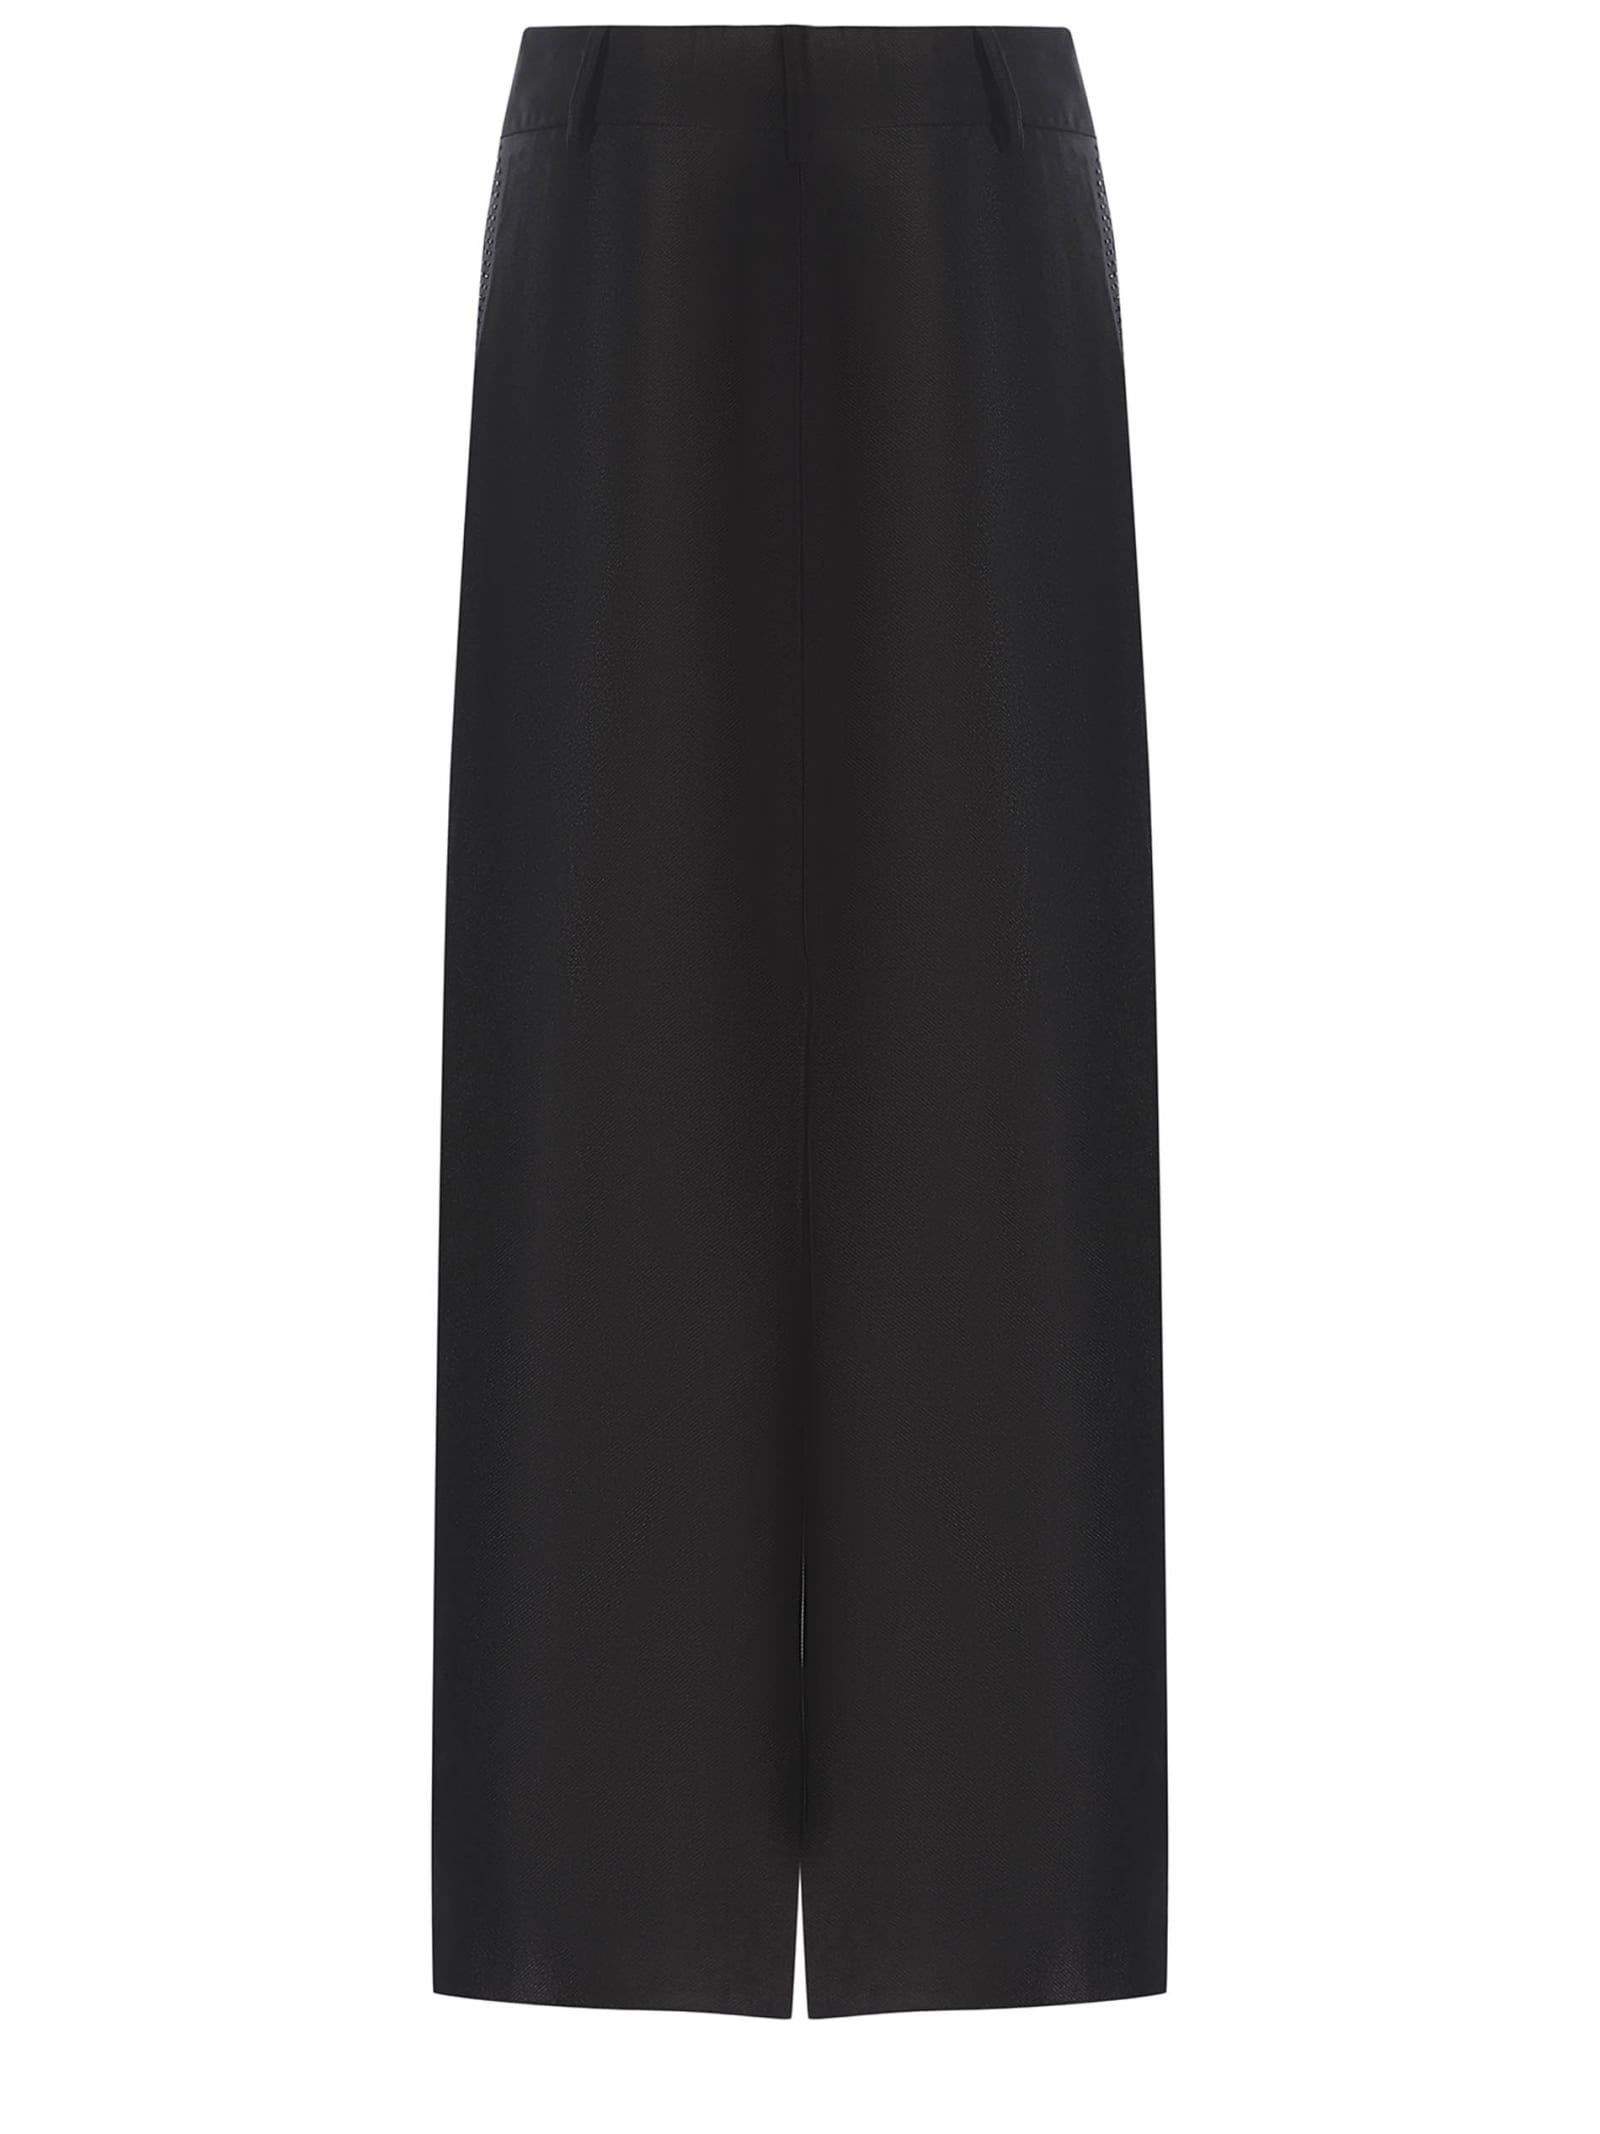 Shop Rotate Birger Christensen Skirt Rotate Made Of Viscose Blend In Nero